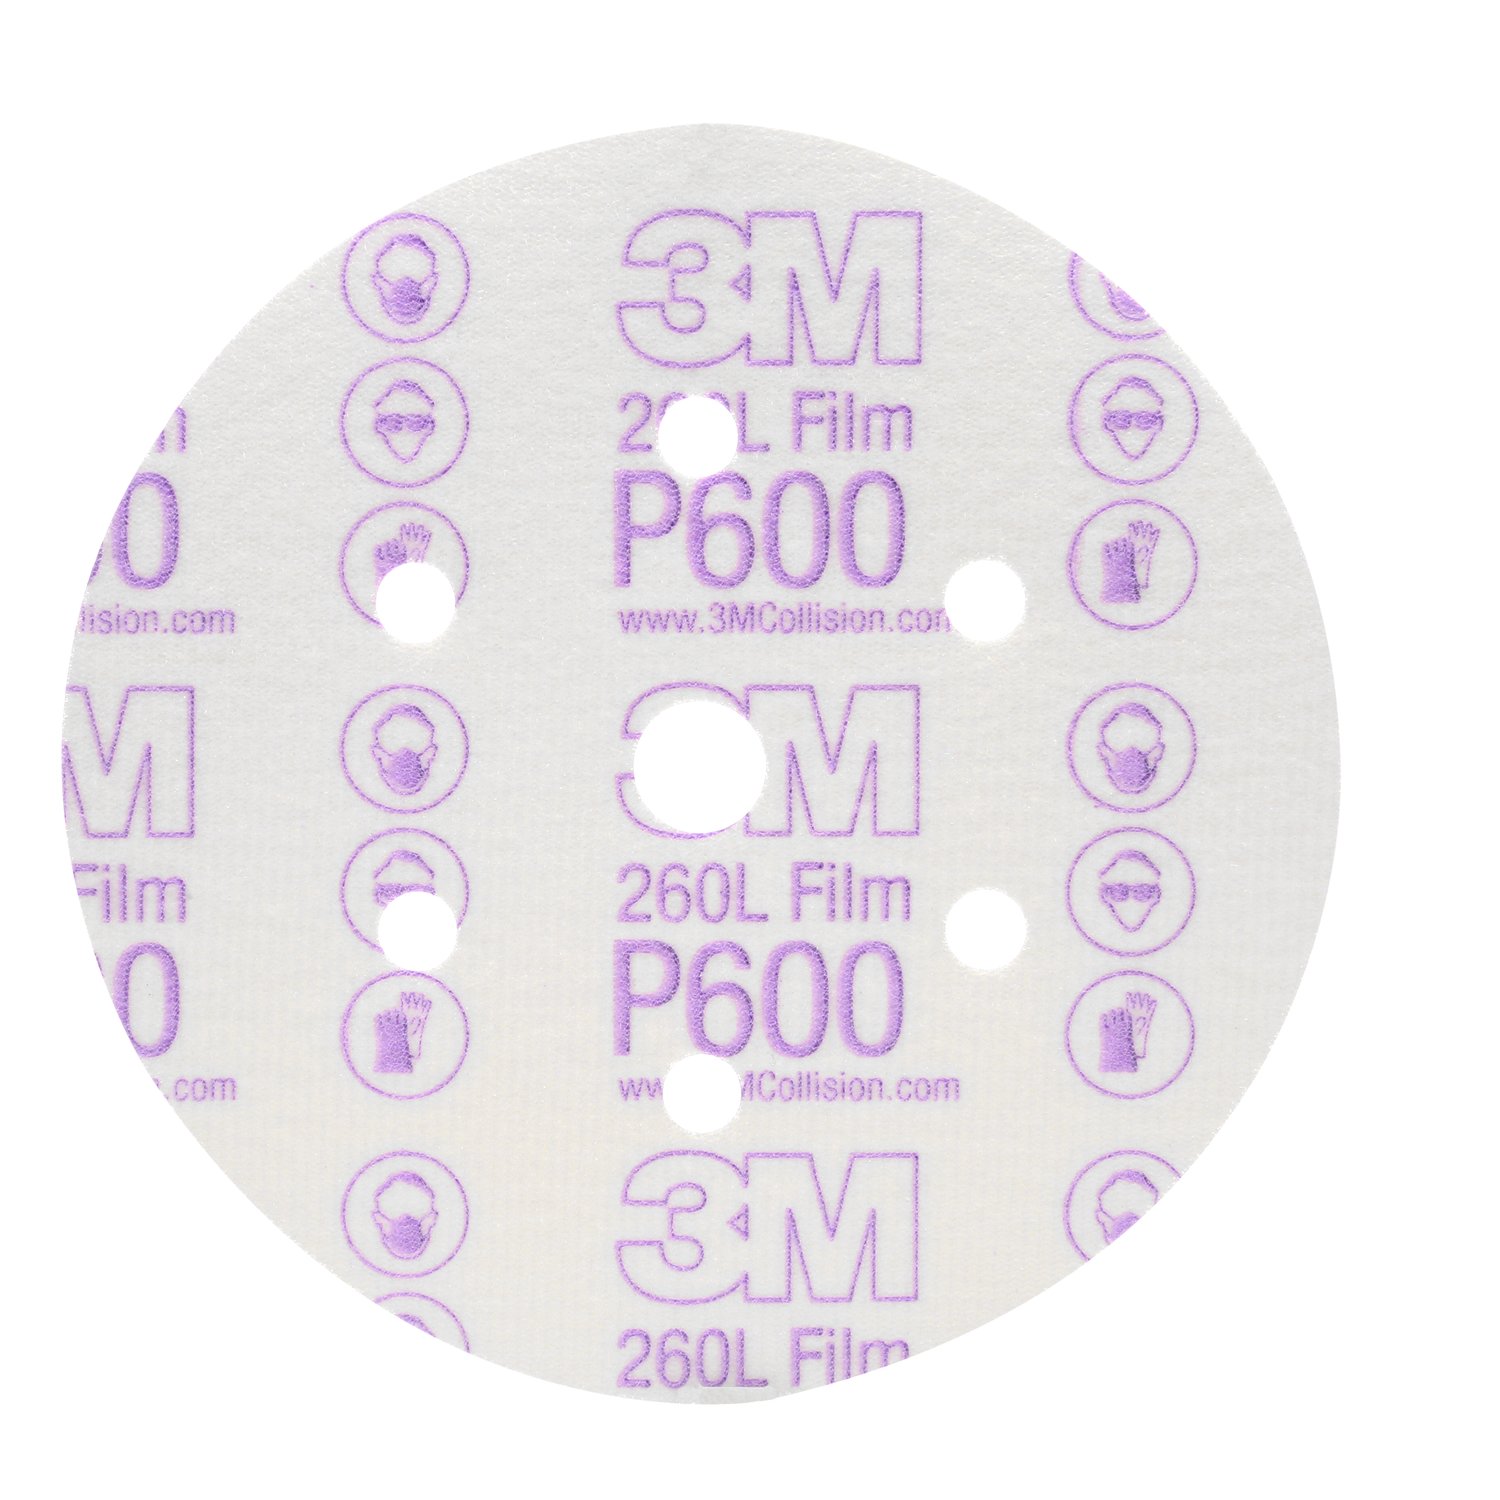 7000119692 - 3M Hookit Finishing Film Abrasive Disc 260L, 01071, 6 in, Dust Free,
P600, 100 discs per carton, 4 cartons per case